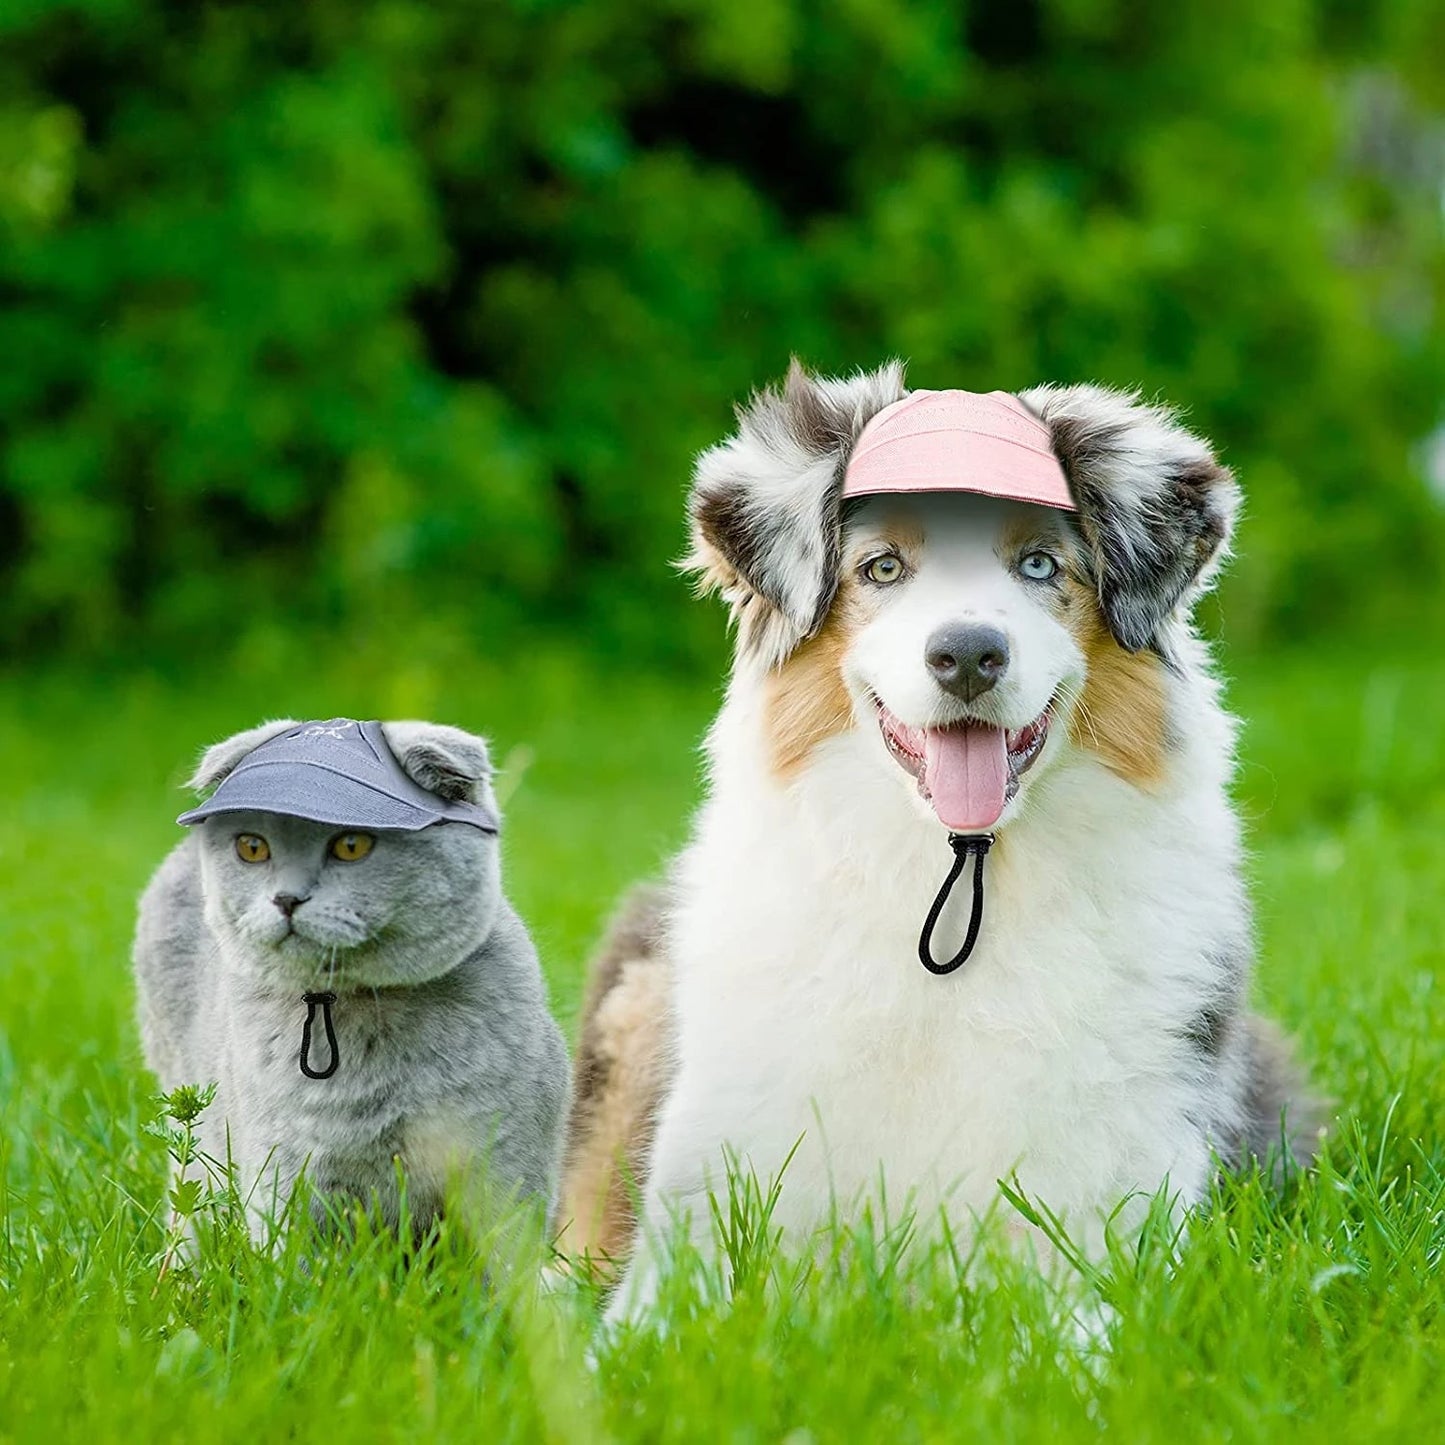 Furgrip Adjustable Puppy Baseball Hat